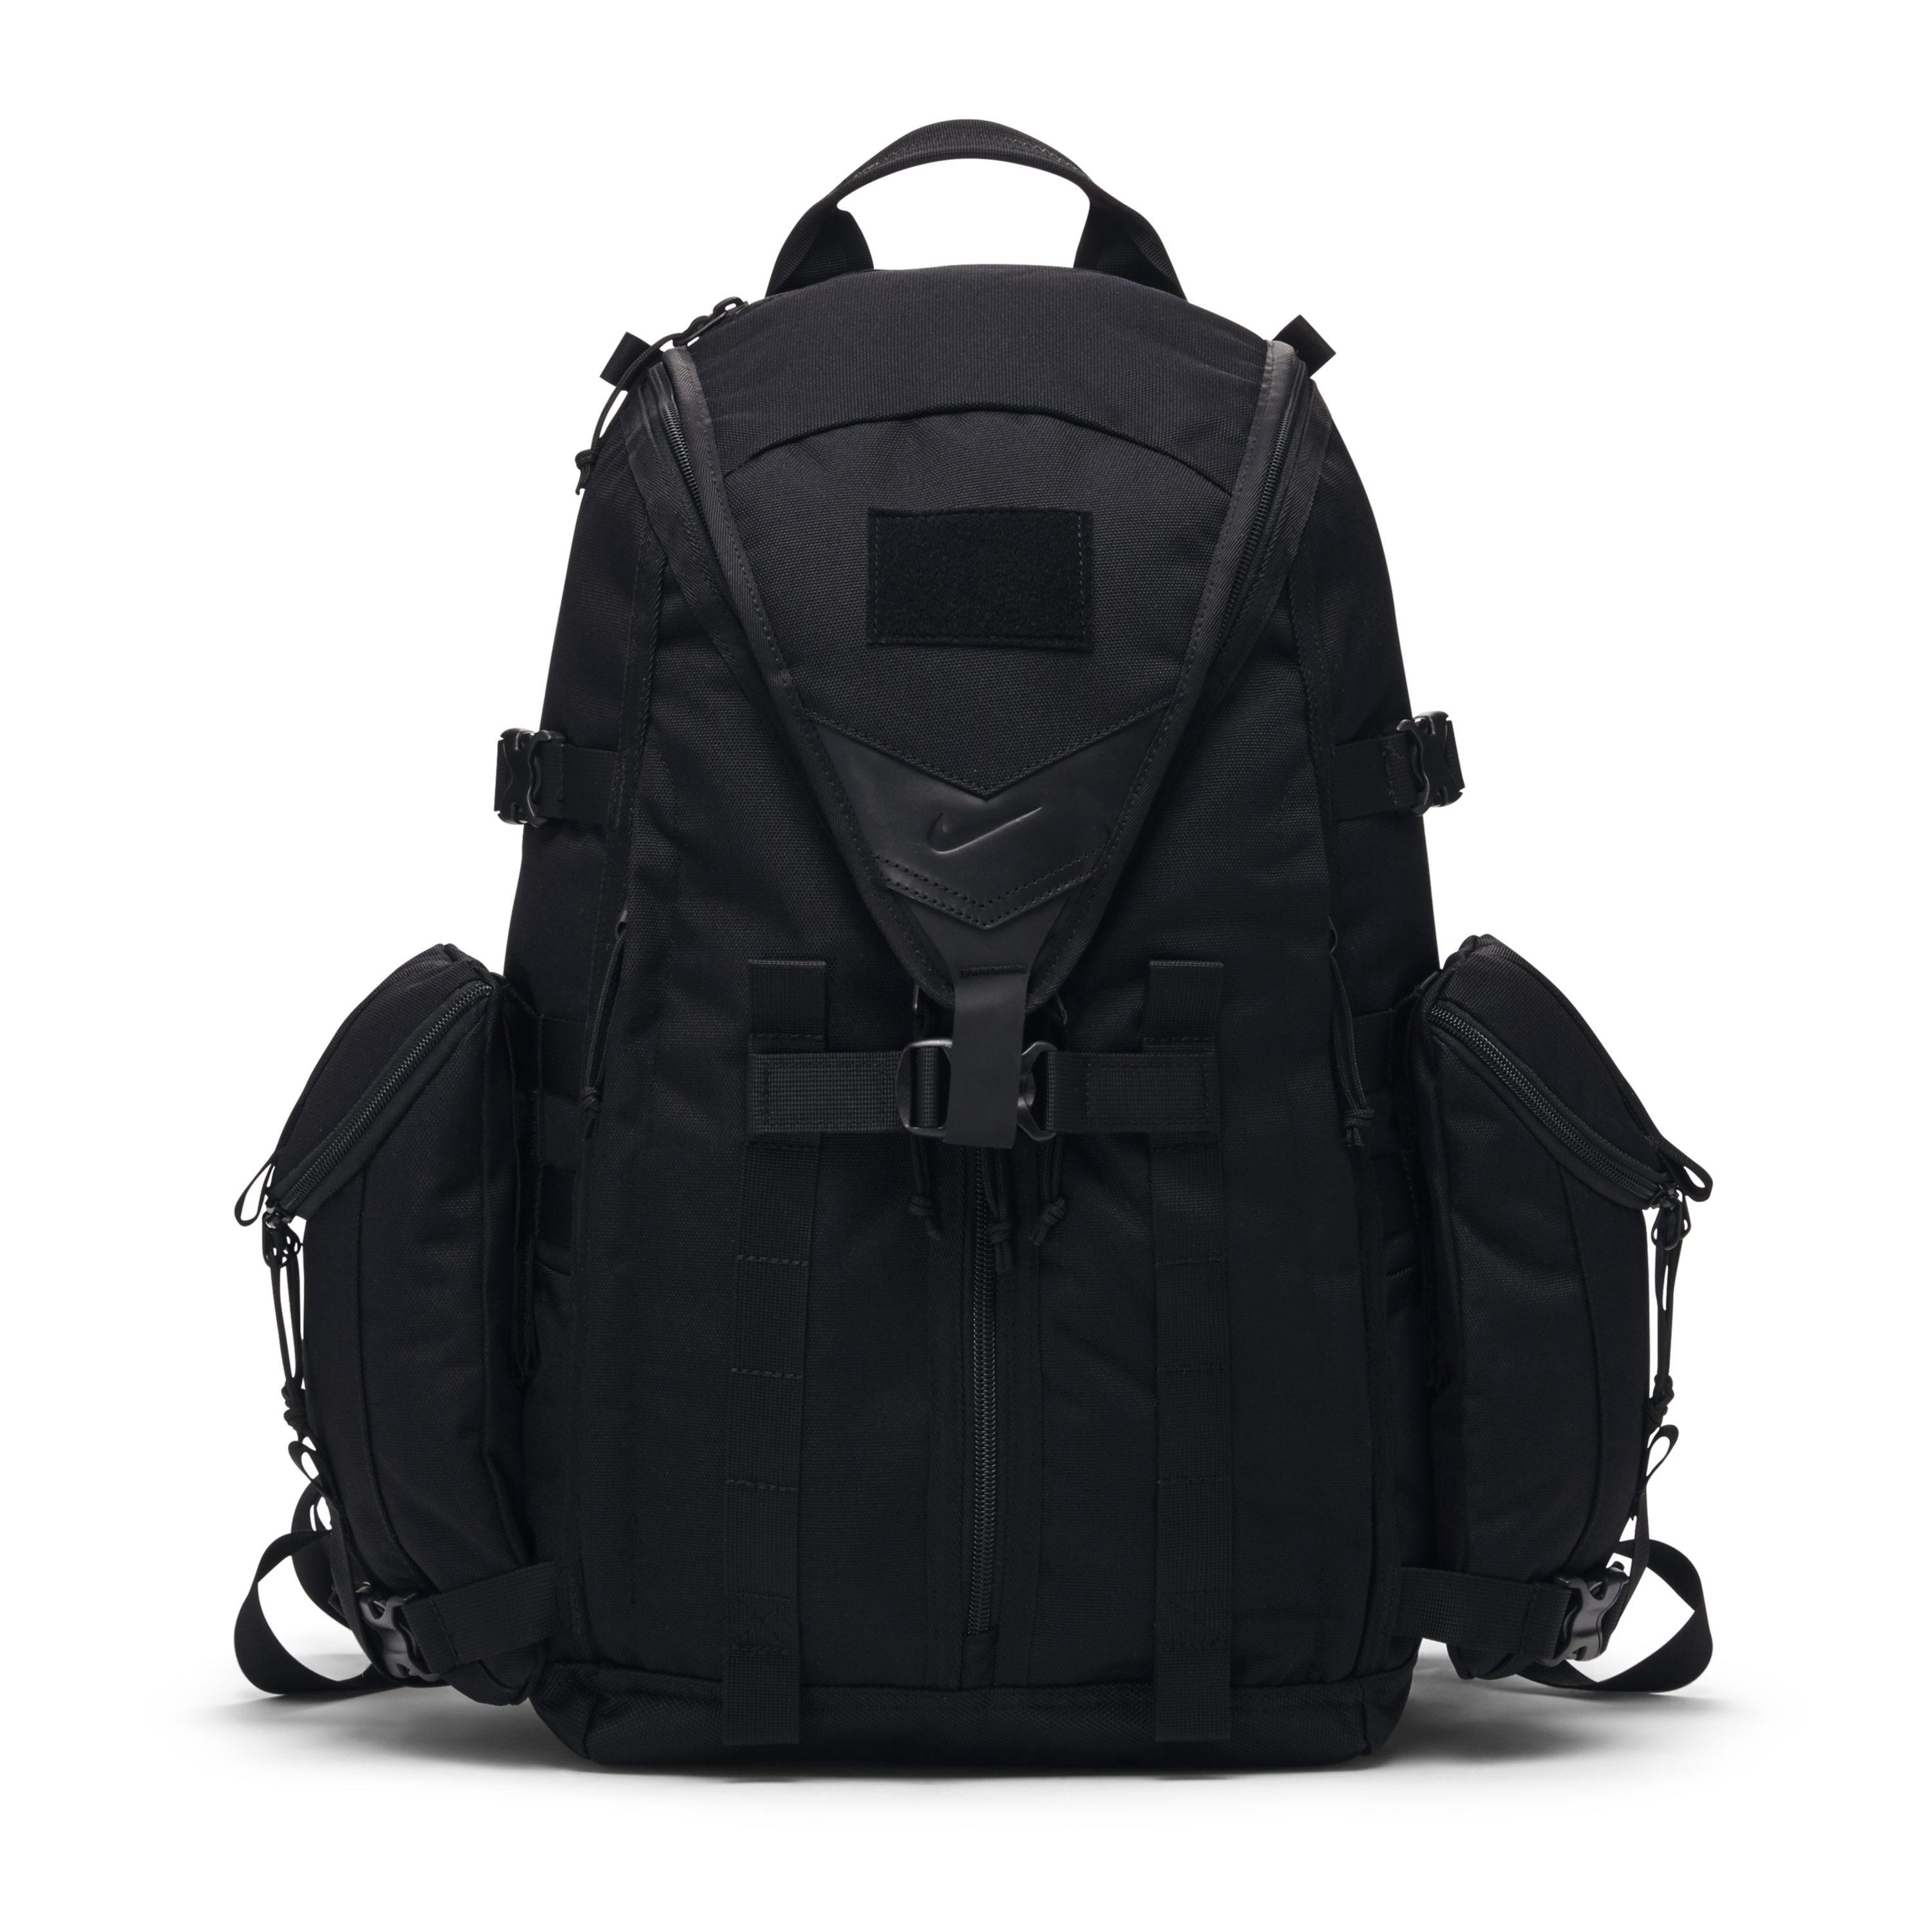 Sfs Responder Backpack (black) - Clearance Sale